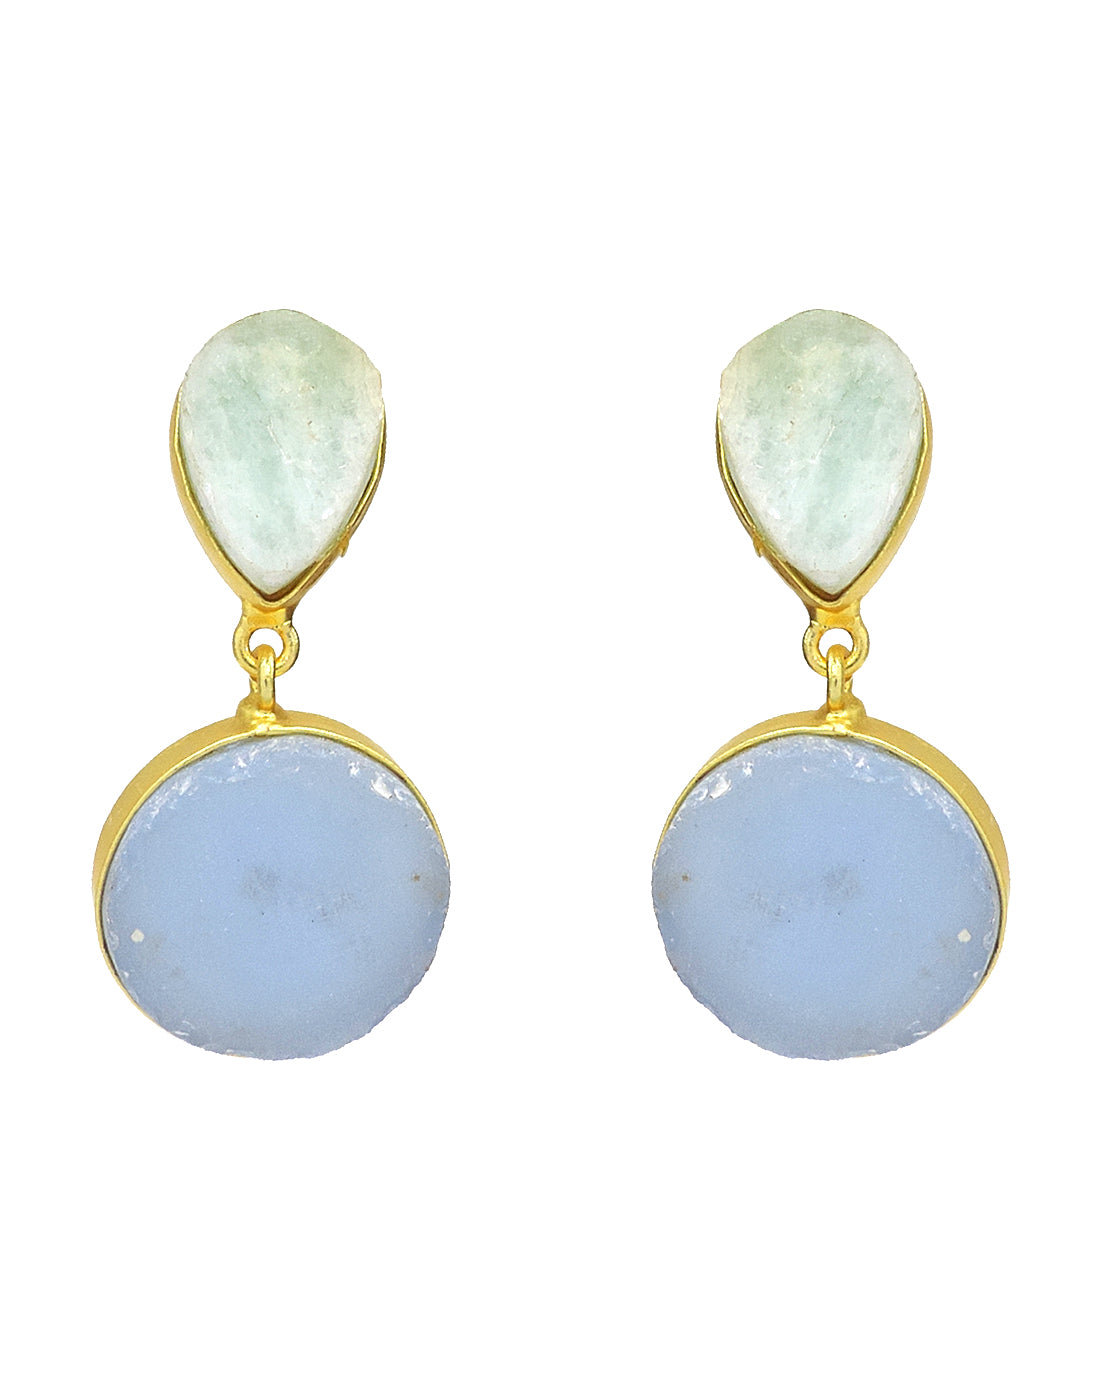 Blue Onyx & Amazonite Earrings - Statement Earrings - Gold-Plated & Hypoallergenic Jewellery - Made in India - Dubai Jewellery - Dori